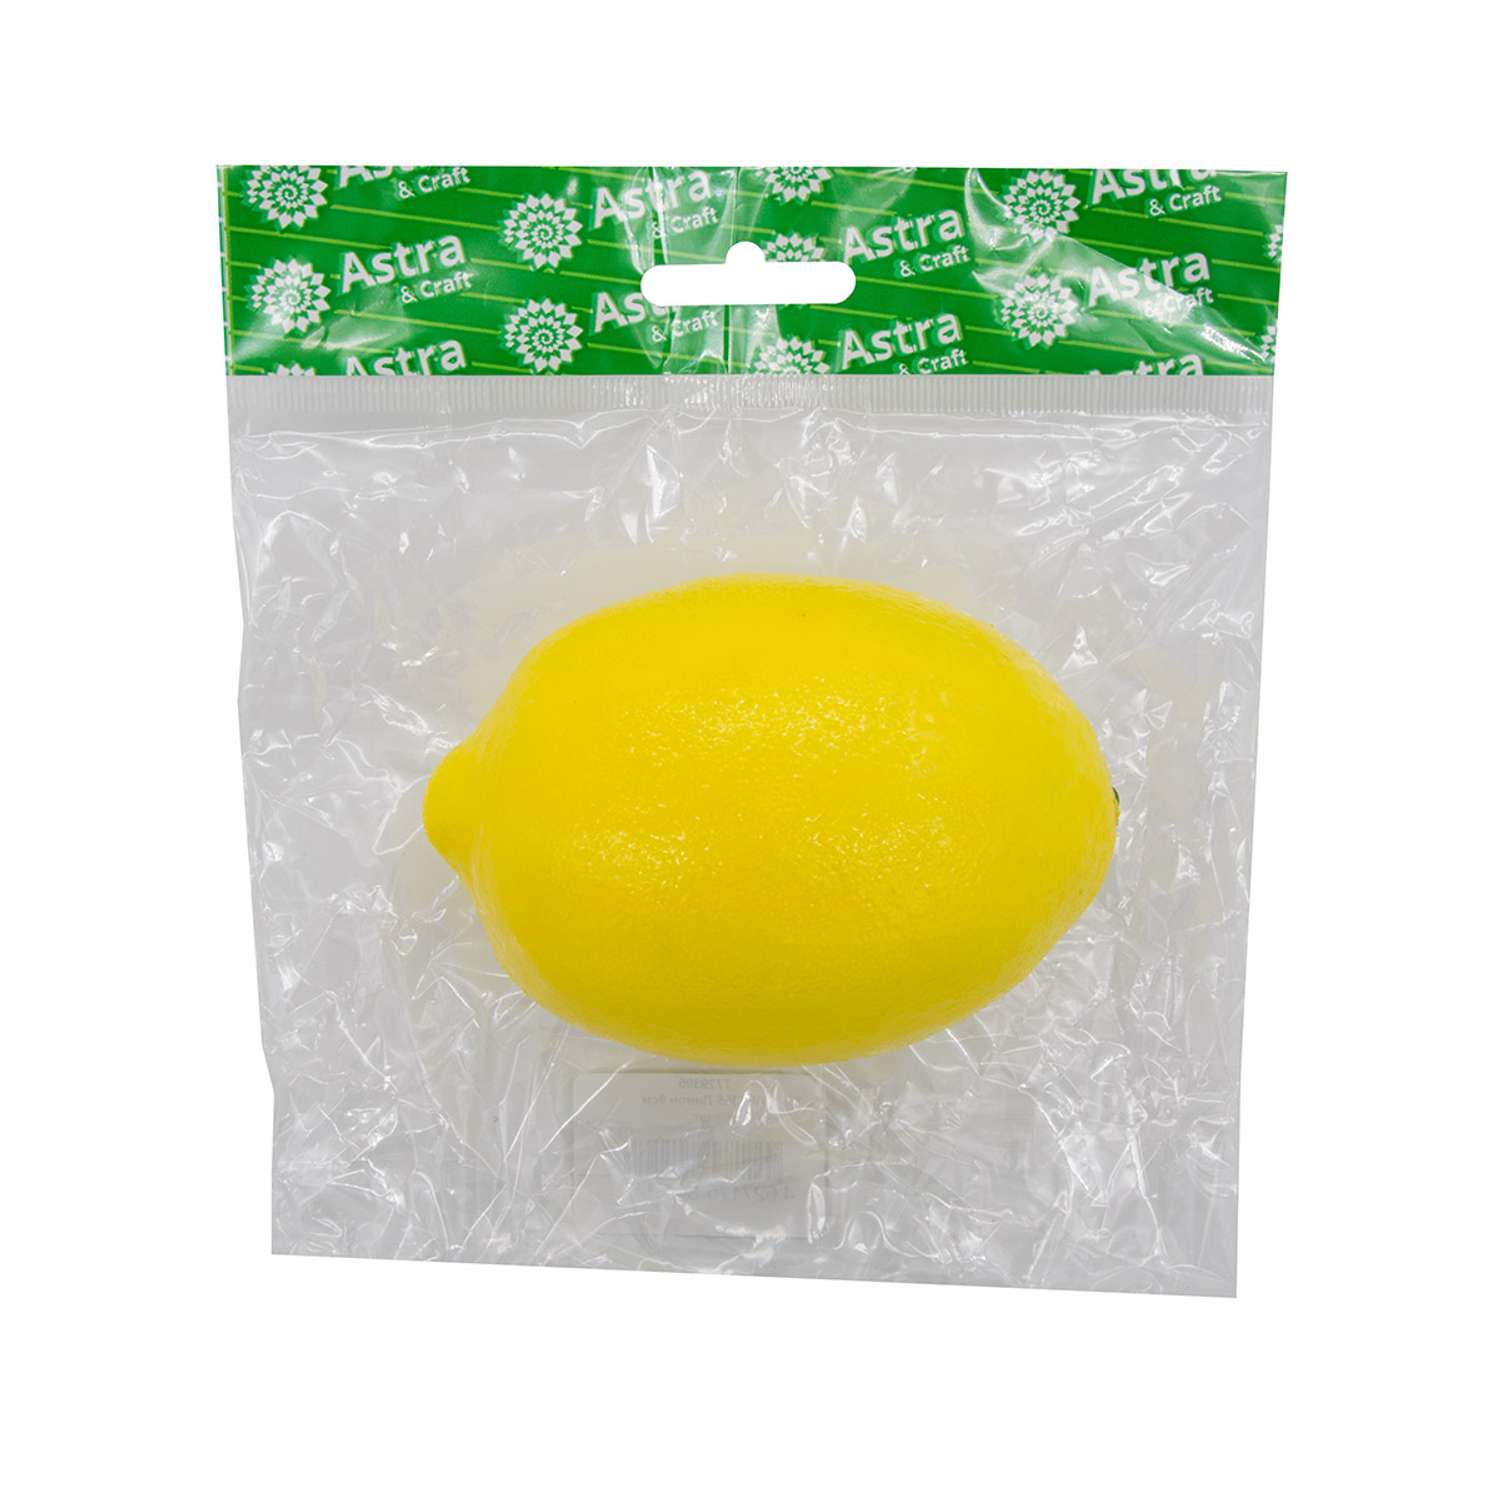 Девять лимонов. Лимон 9см. АБС лимон 9кг. Le09 Lemon Ice 13x13. Lemon Craft Skin.